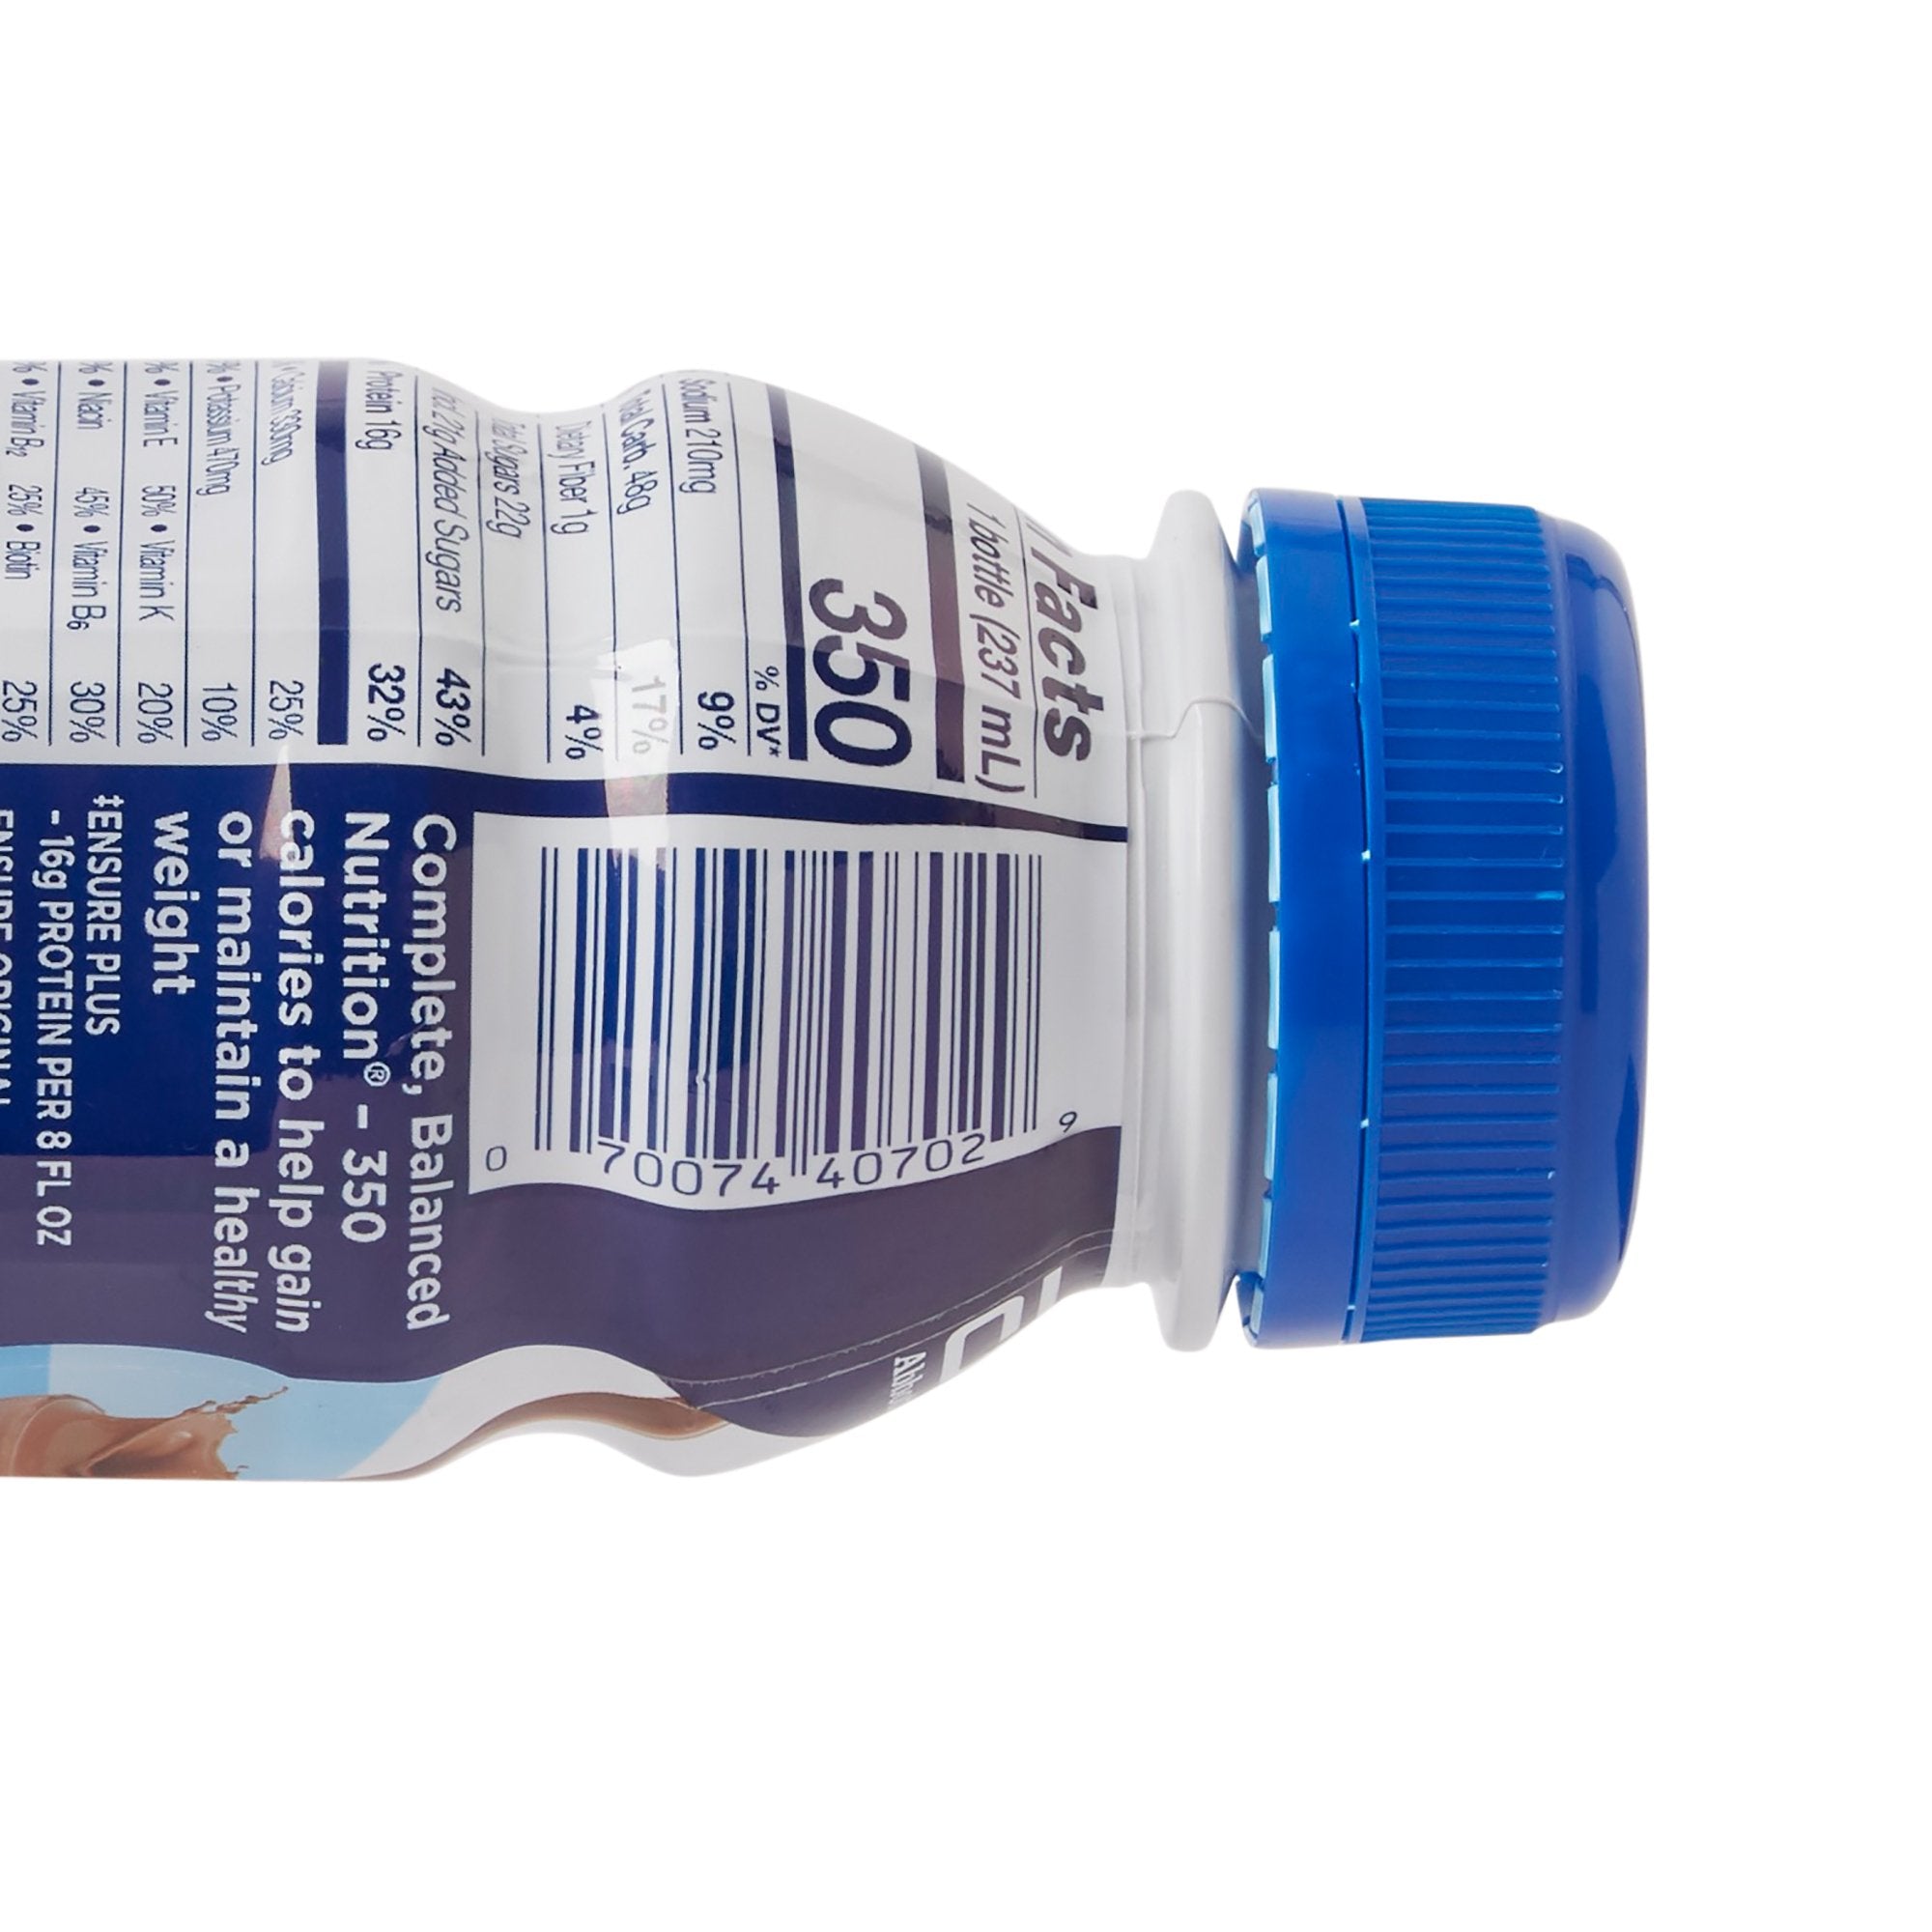 Oral Supplement Ensure Plus Nutrition Shake Milk Chocolate Flavor Liquid 8 oz. Bottle